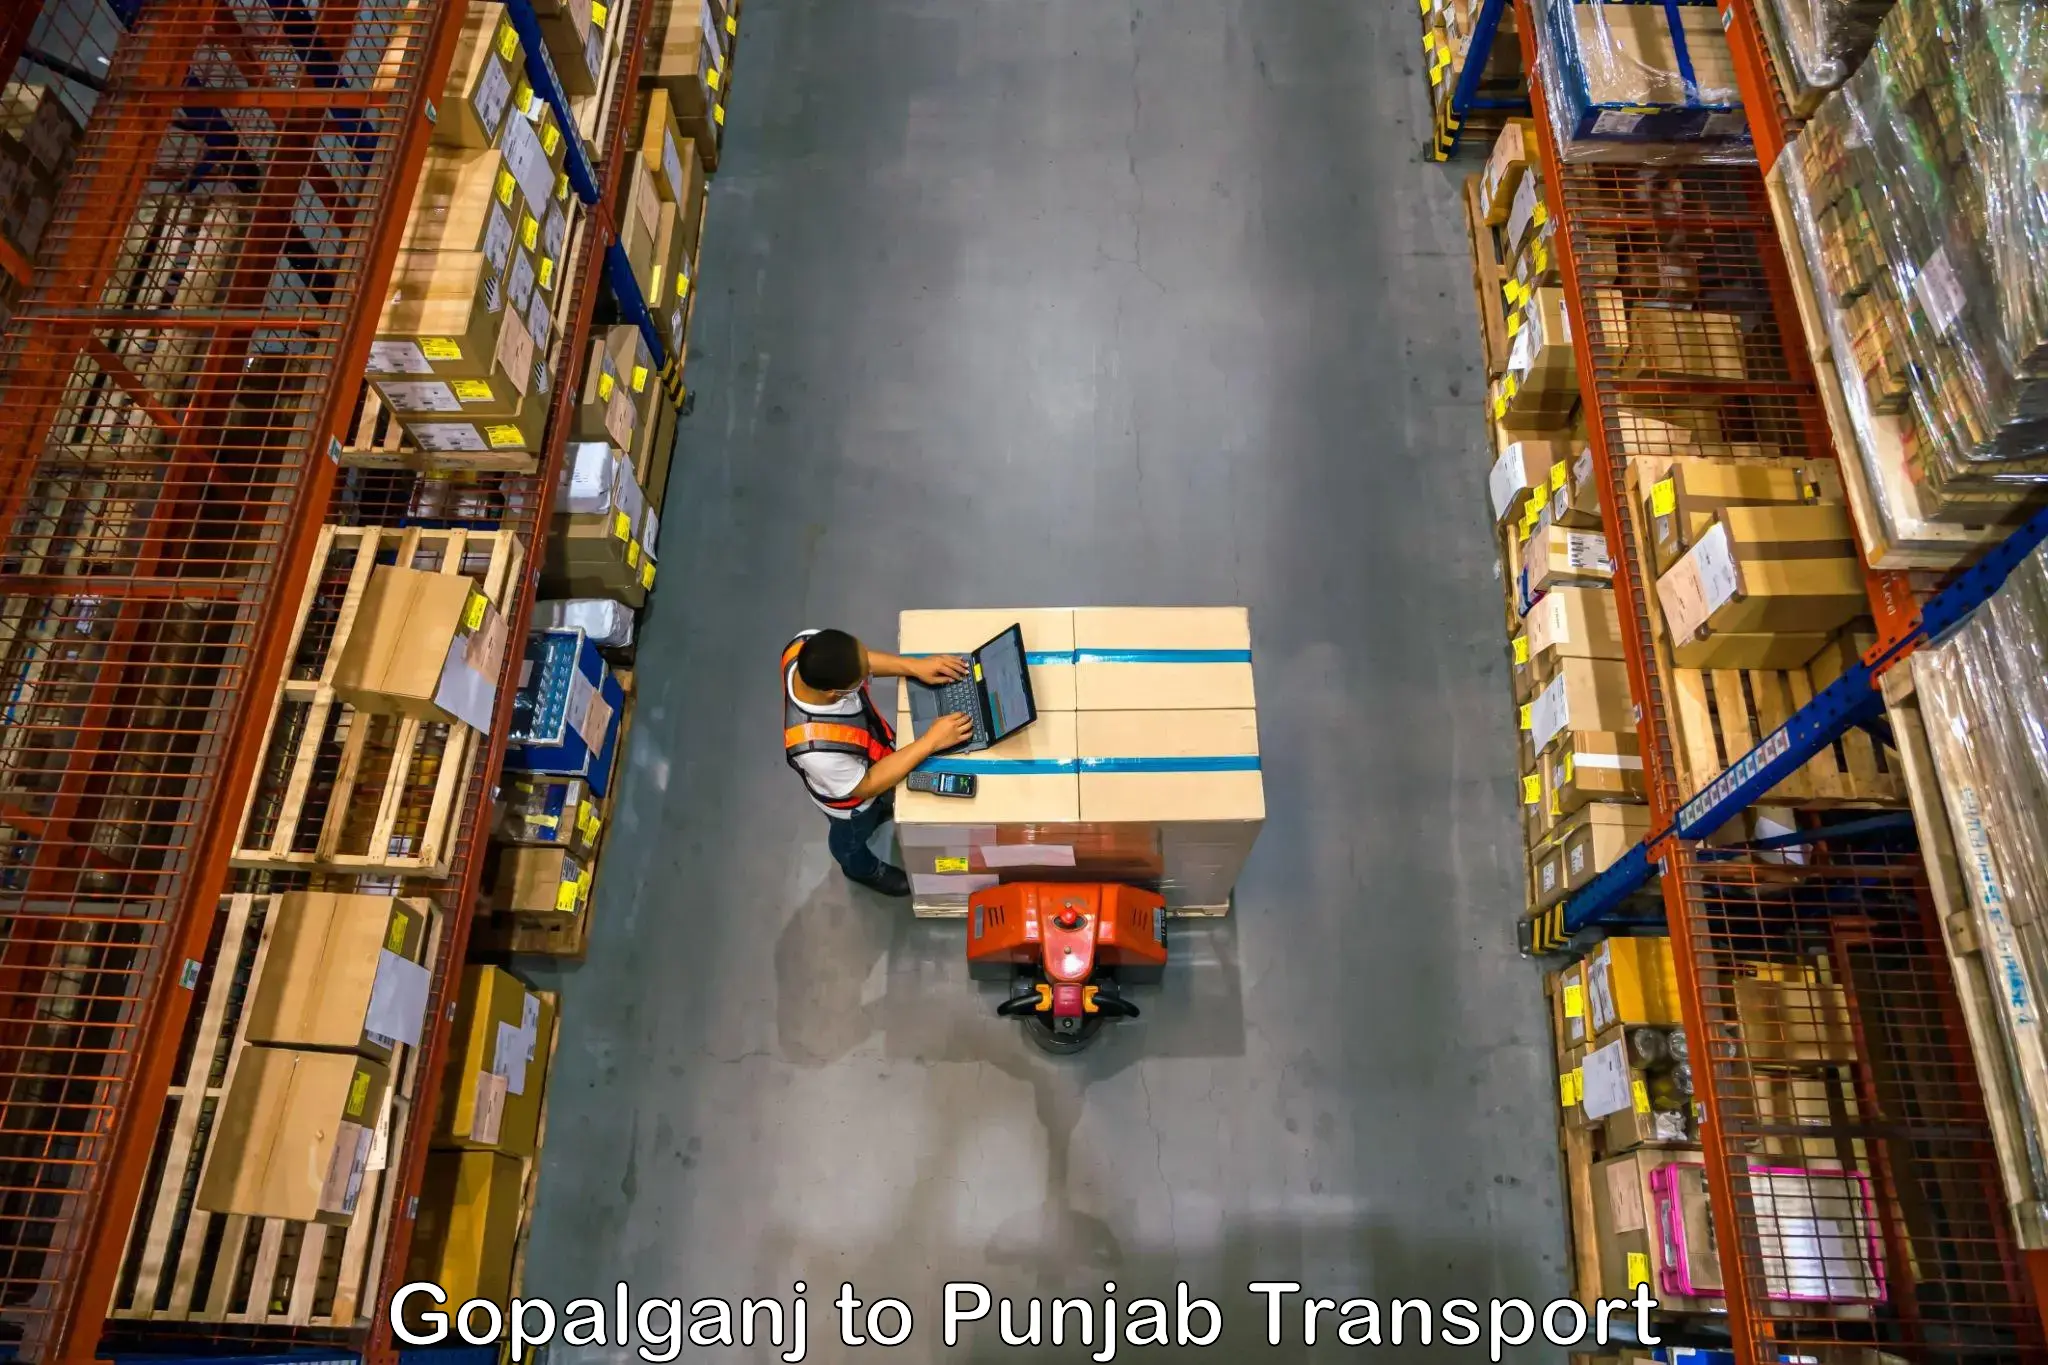 Delivery service Gopalganj to Ludhiana